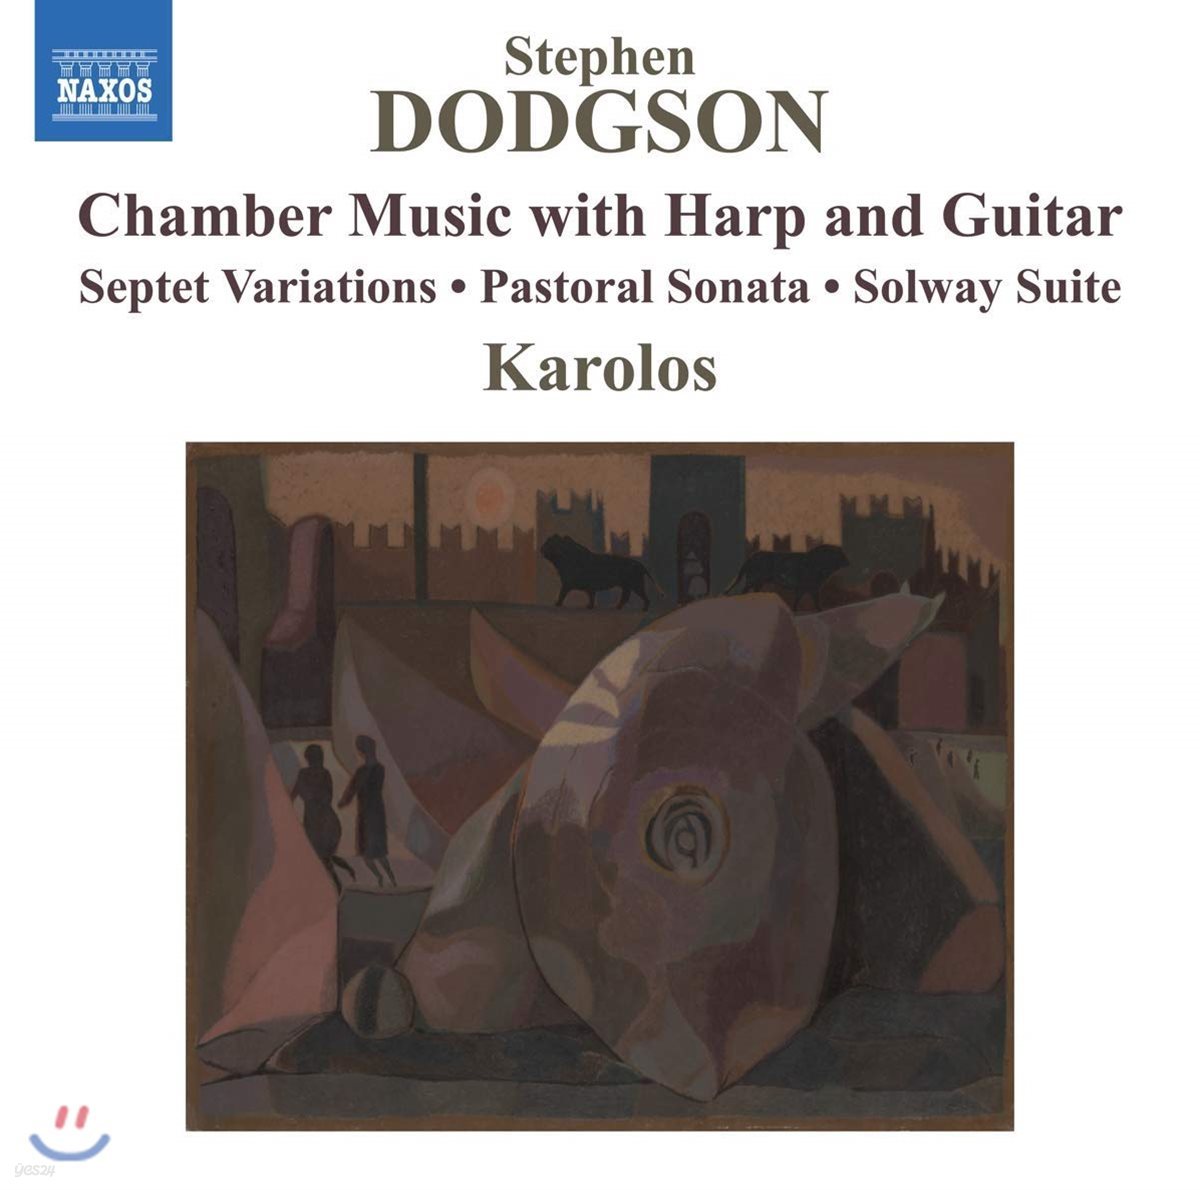 Karolos 스티븐 도지슨: 하프와 기타 실내악 작품집 (Dodgson: Chamber Music with Harp and Guitar) 카롤로스